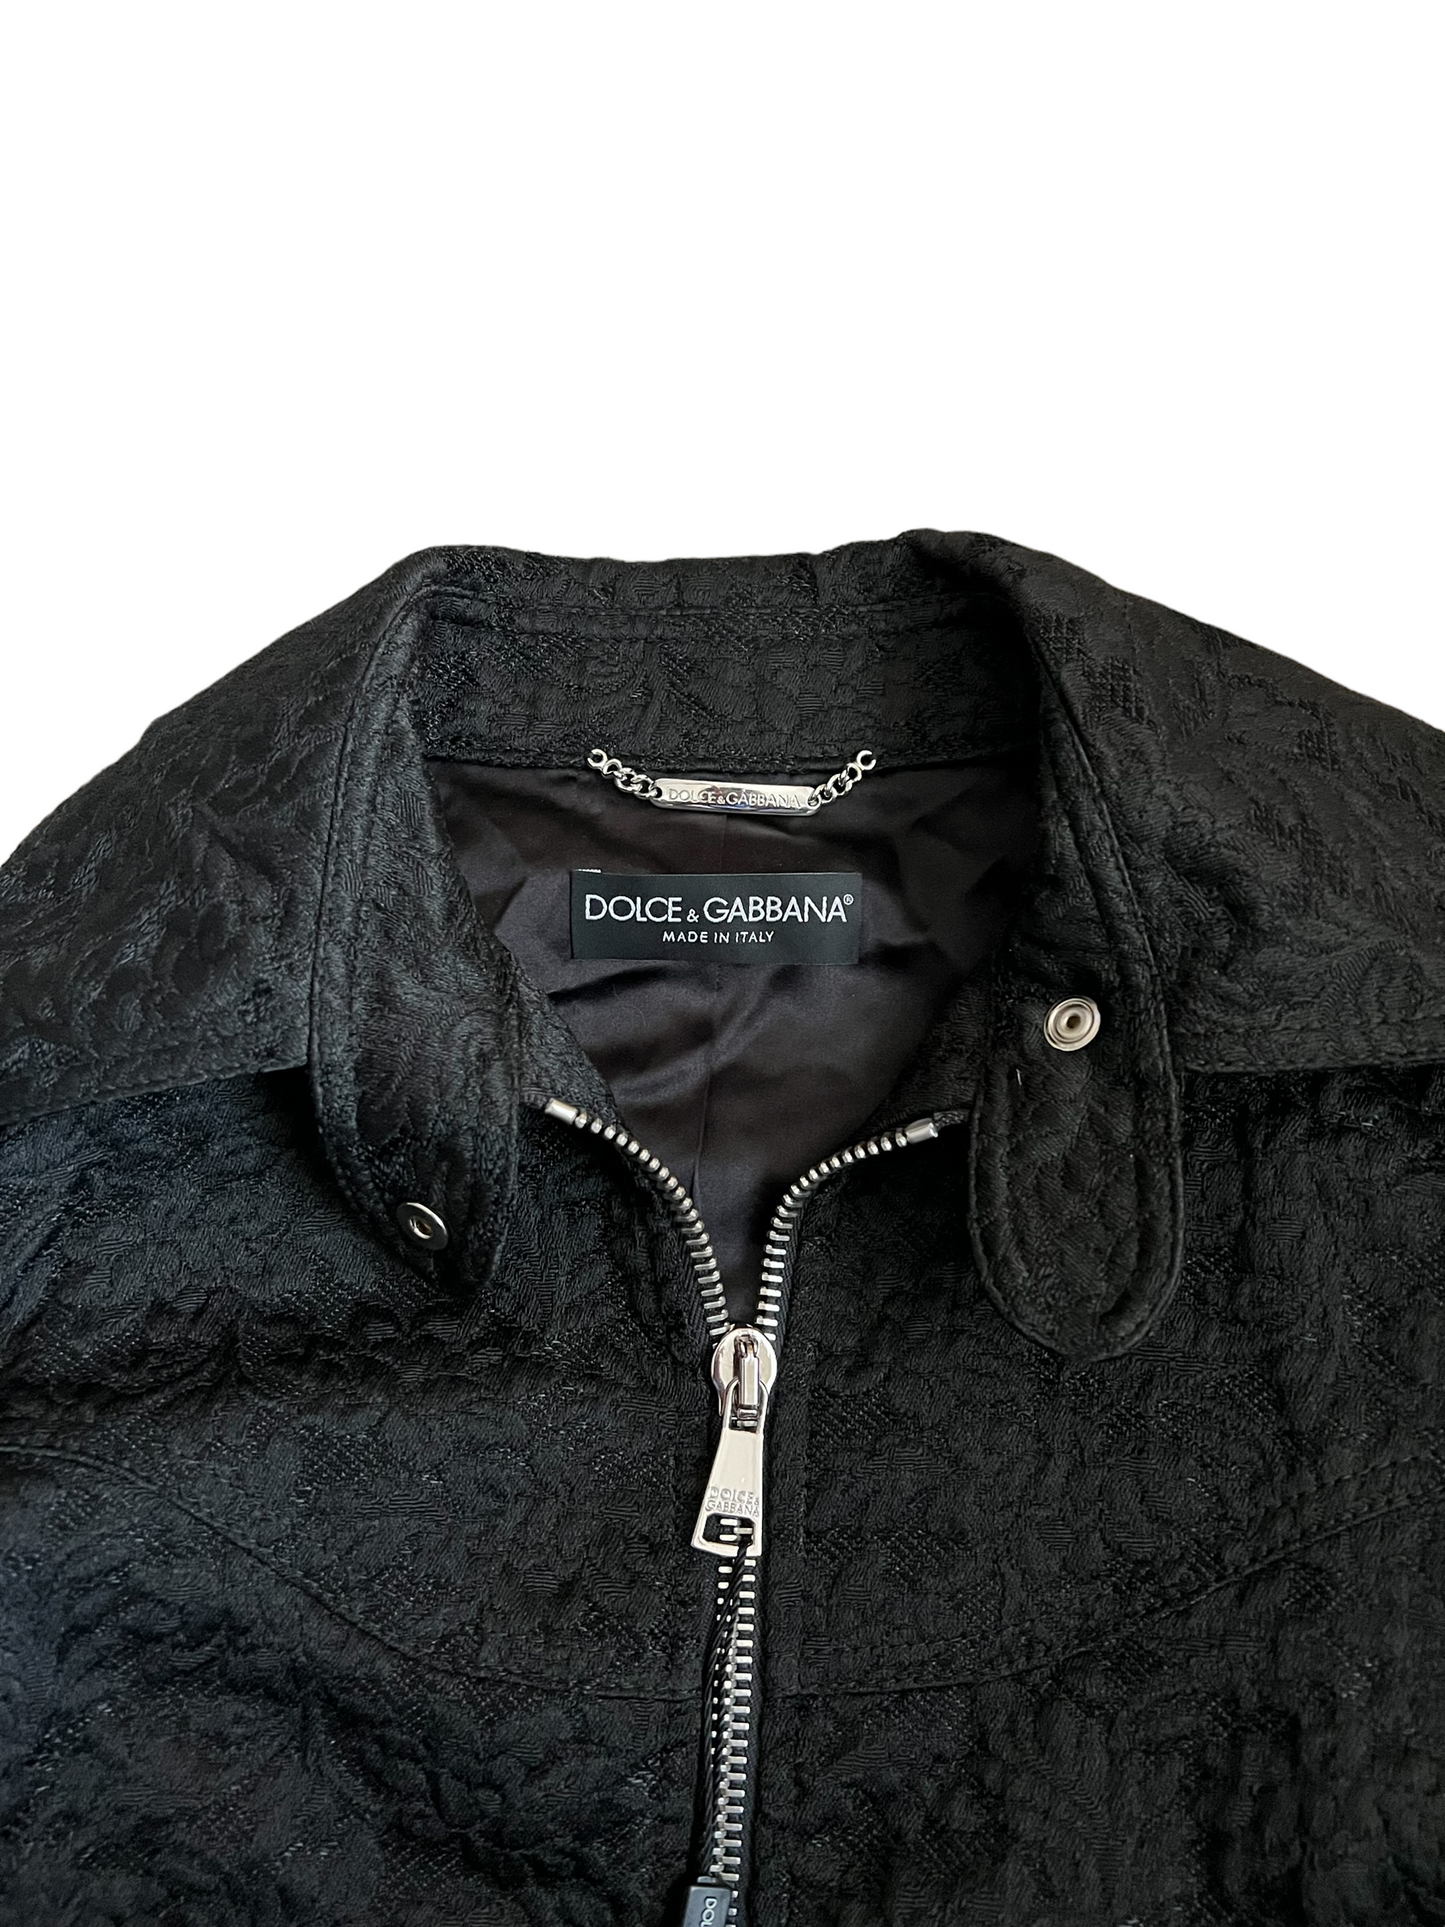 Dolce & Gabbana Black Embroidered Size 46 Jacket